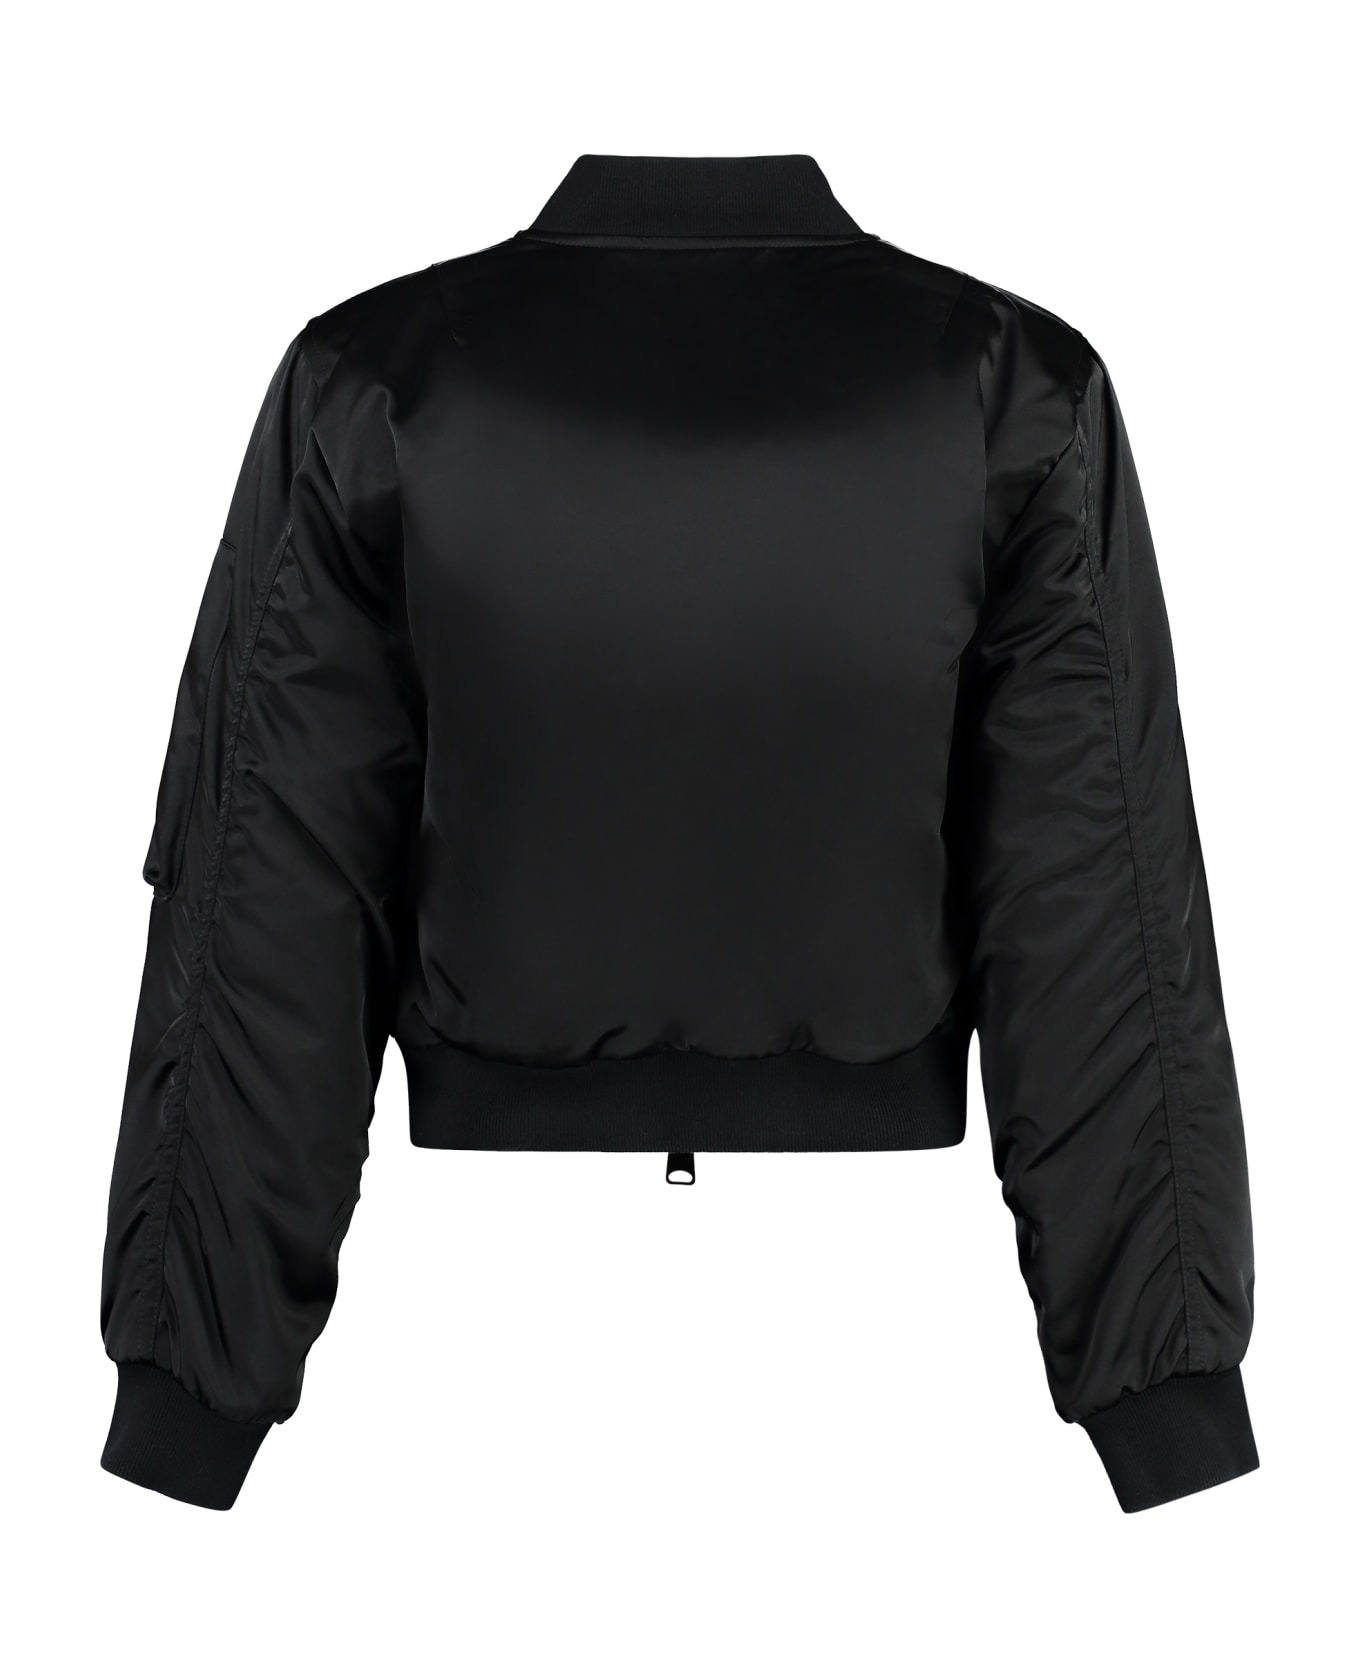 Balenciaga Shrunk Nylon Bomber Jacket - black